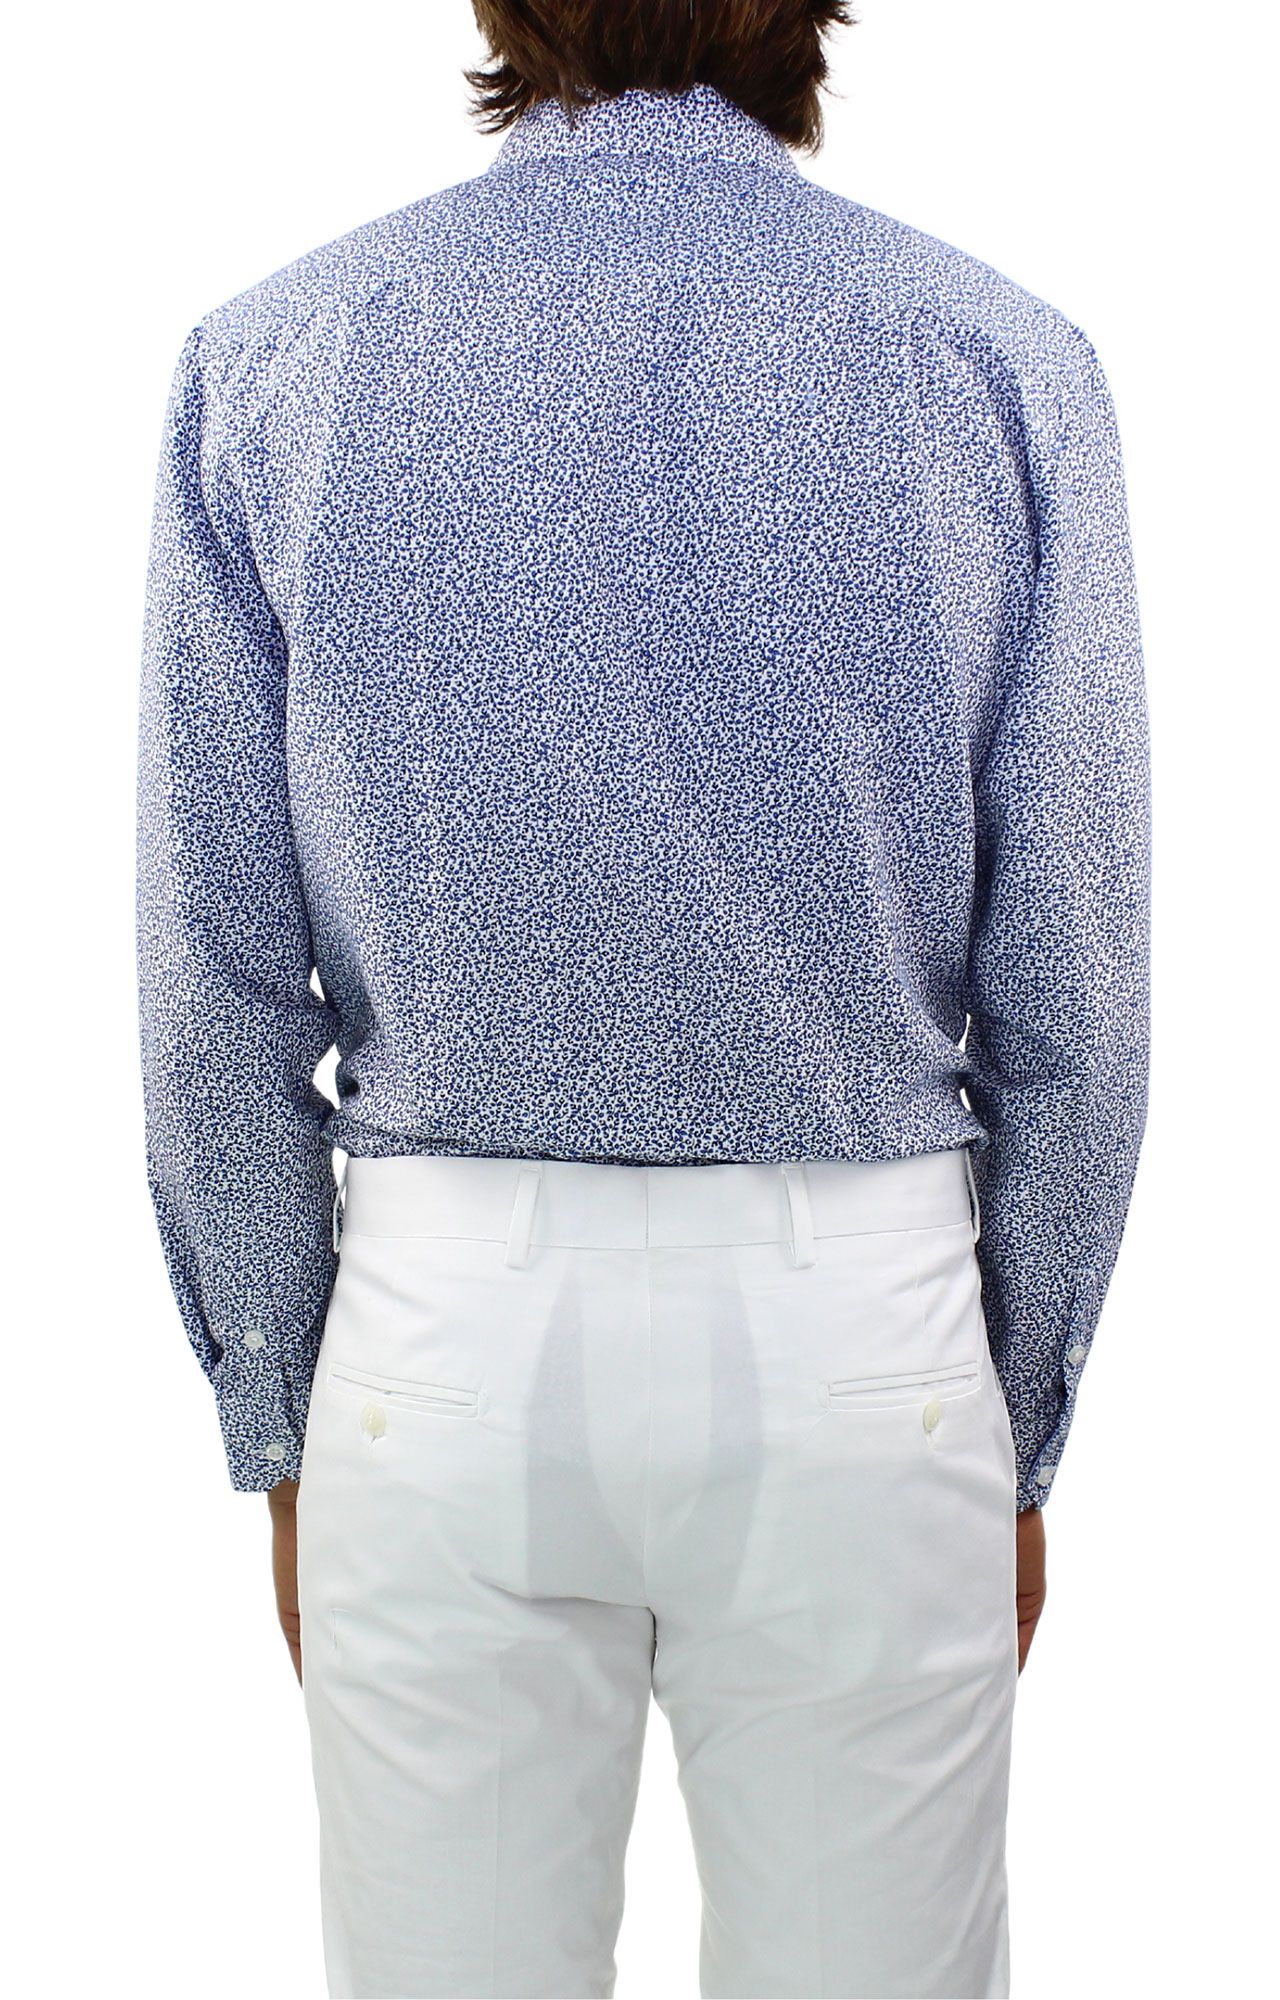 Seidensticker Uomo Camicia Manica Lunga Slim Blu/Bianco a Quadri Print 676920.16 